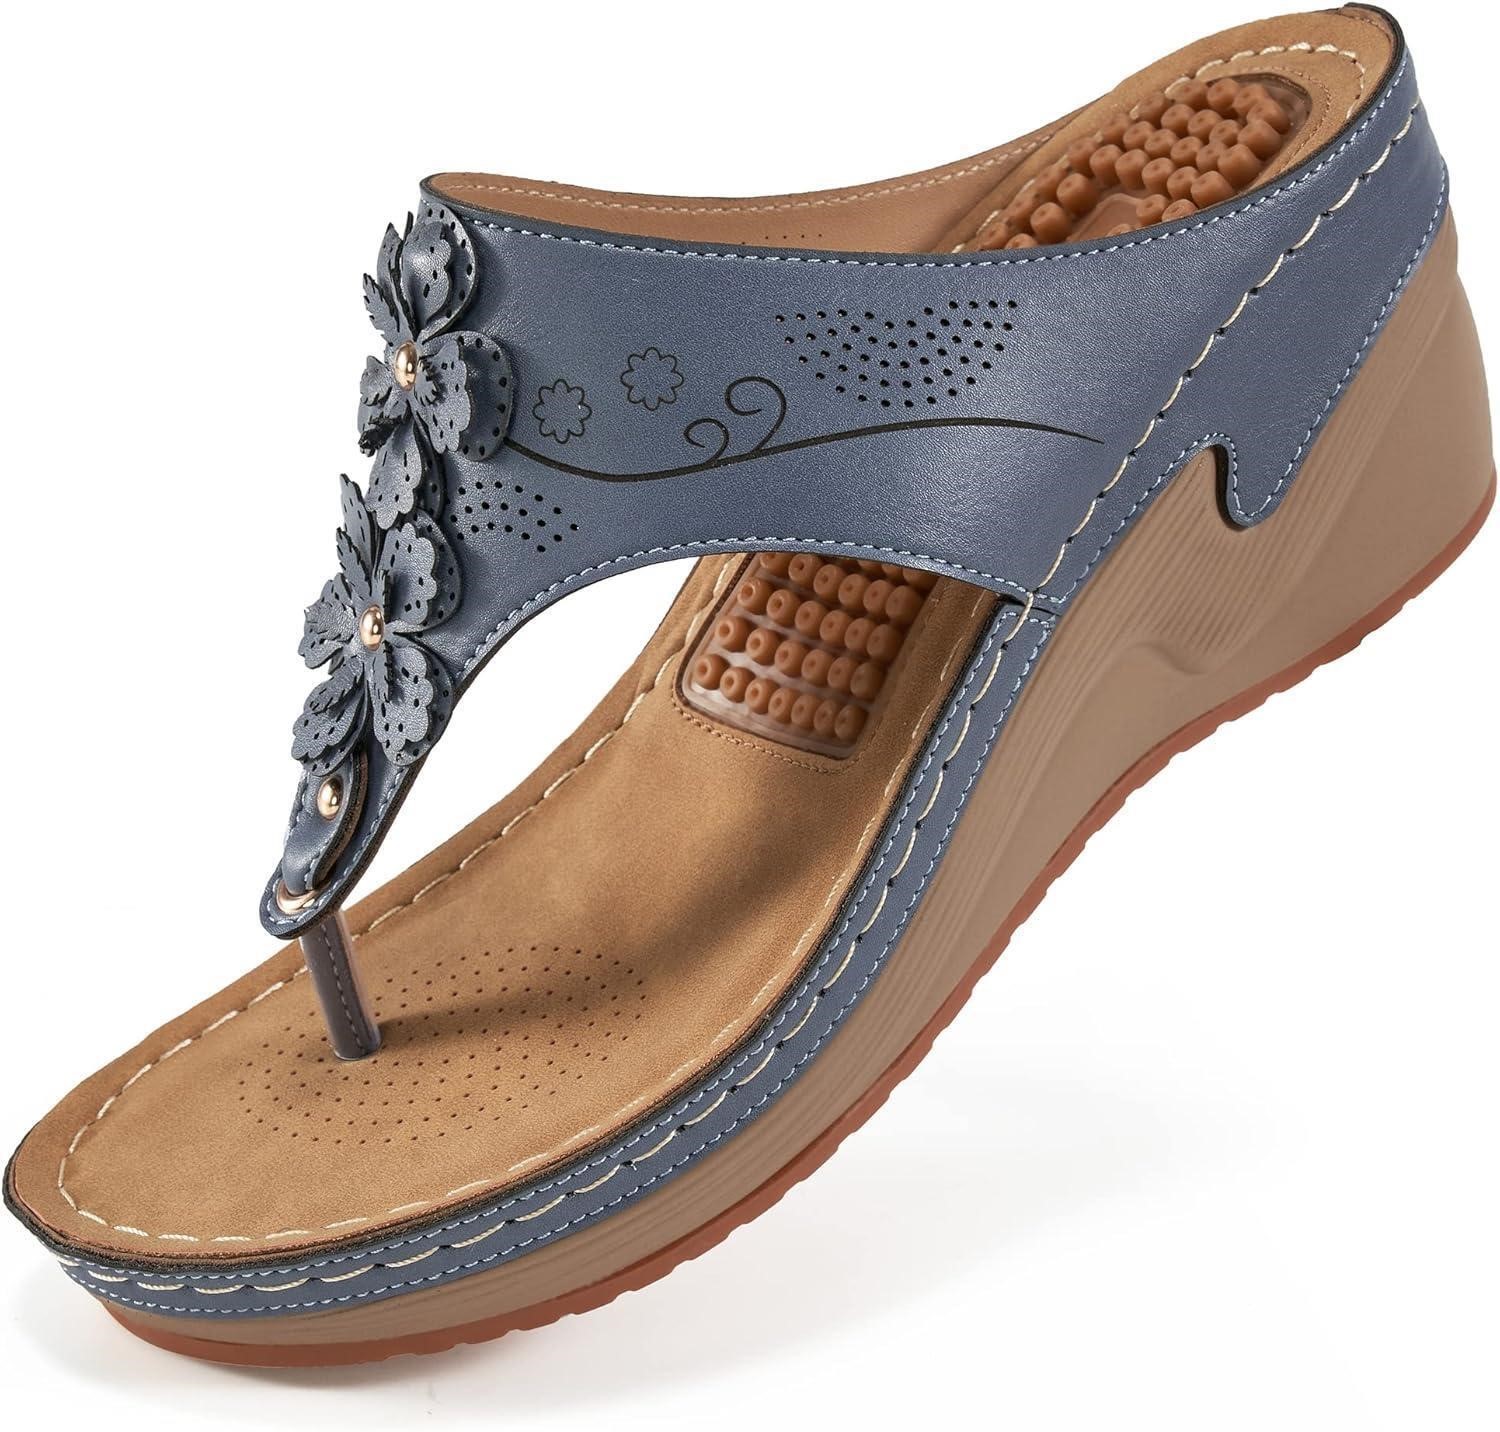 SEALED-Flip Flops Sandals for Women